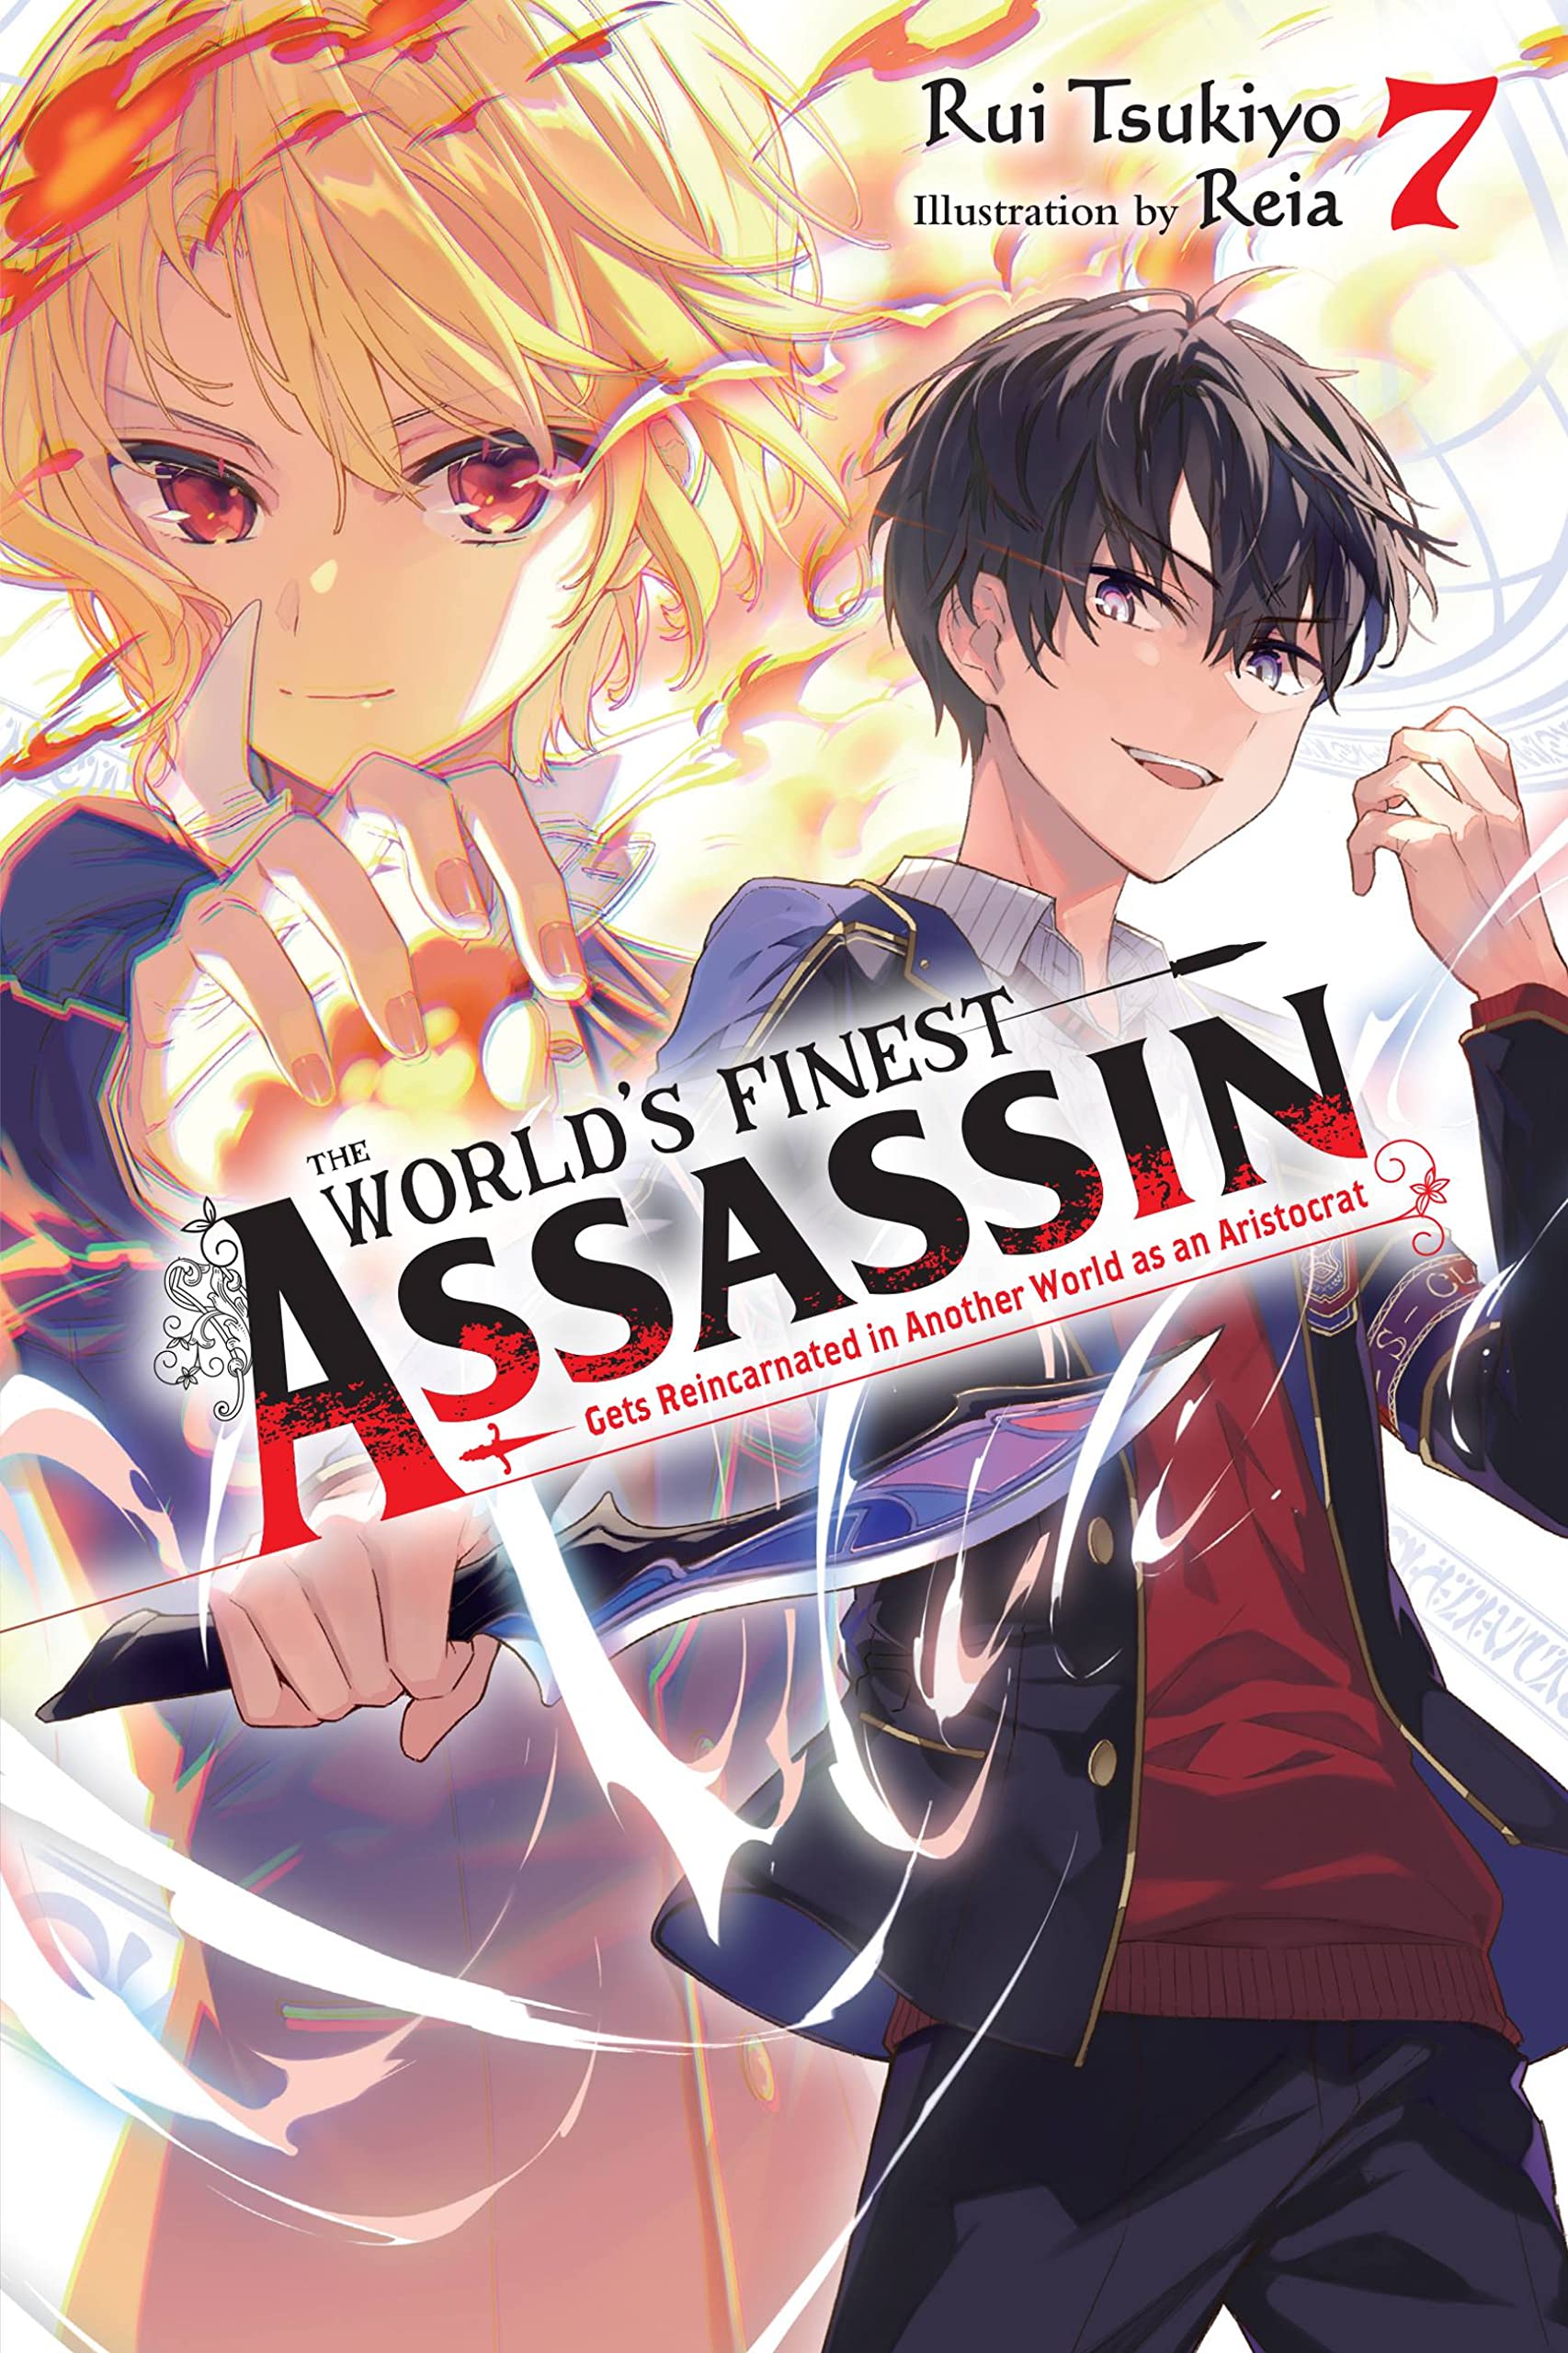 The World's Finest Assassin Gets Reincarnated in Another World as an Aristocrat Vol. 07 (Light Novel)